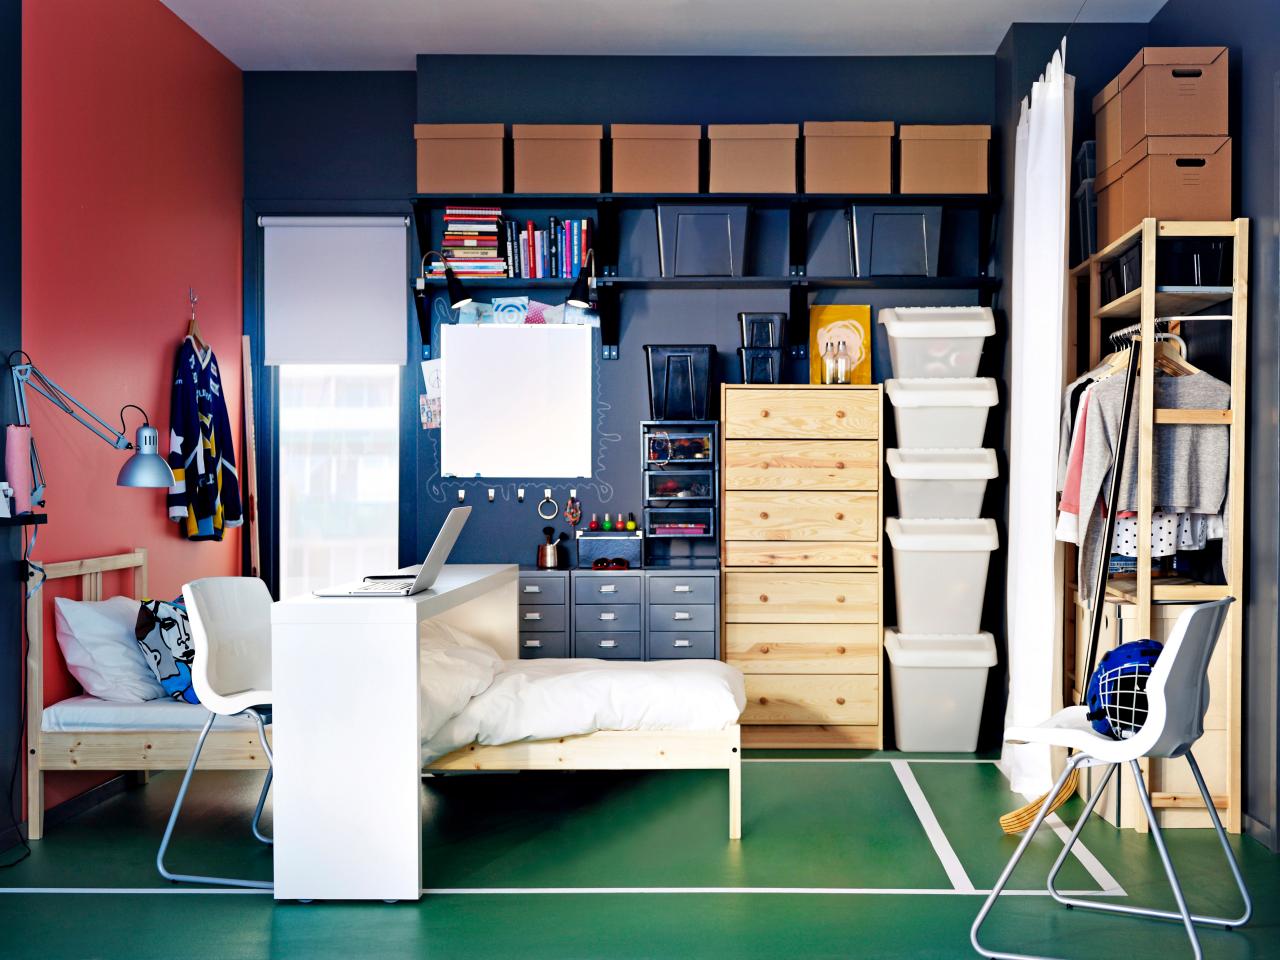 CI-IKEA_dorm-room-design-sports-themed-bedroom_s4x3.jpg.rend.hgtvcom.1280.960.jpeg